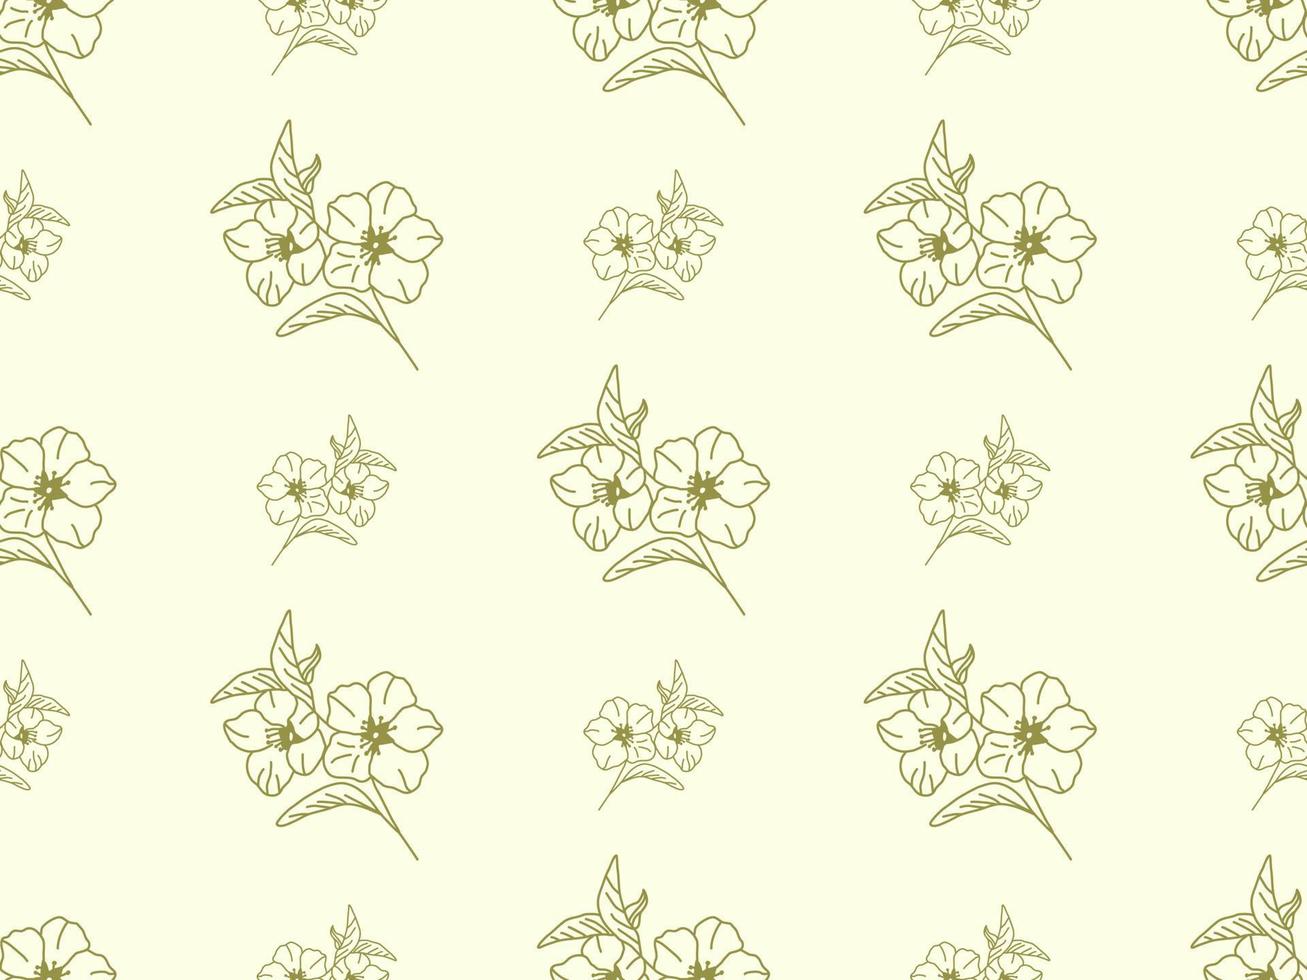 blomma seriefigur seamless mönster på gul bakgrund vektor